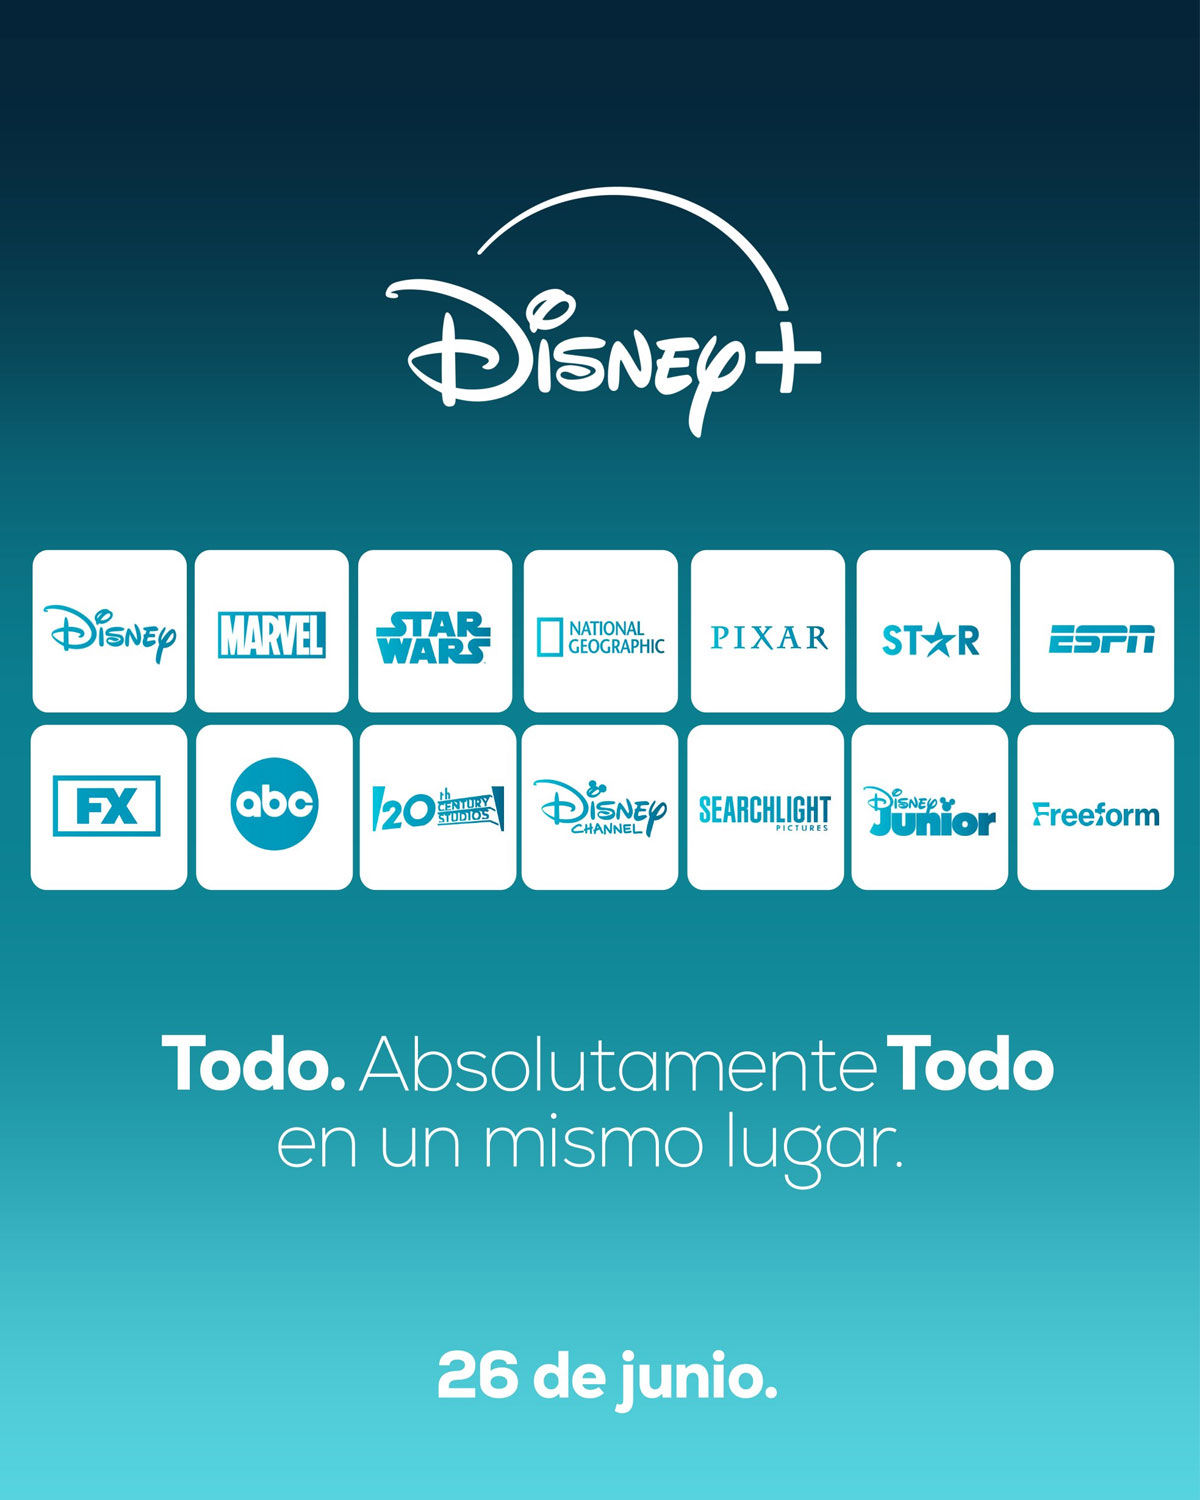 Disney+ transmitirá fútbol en directo: Star+ desparecerá